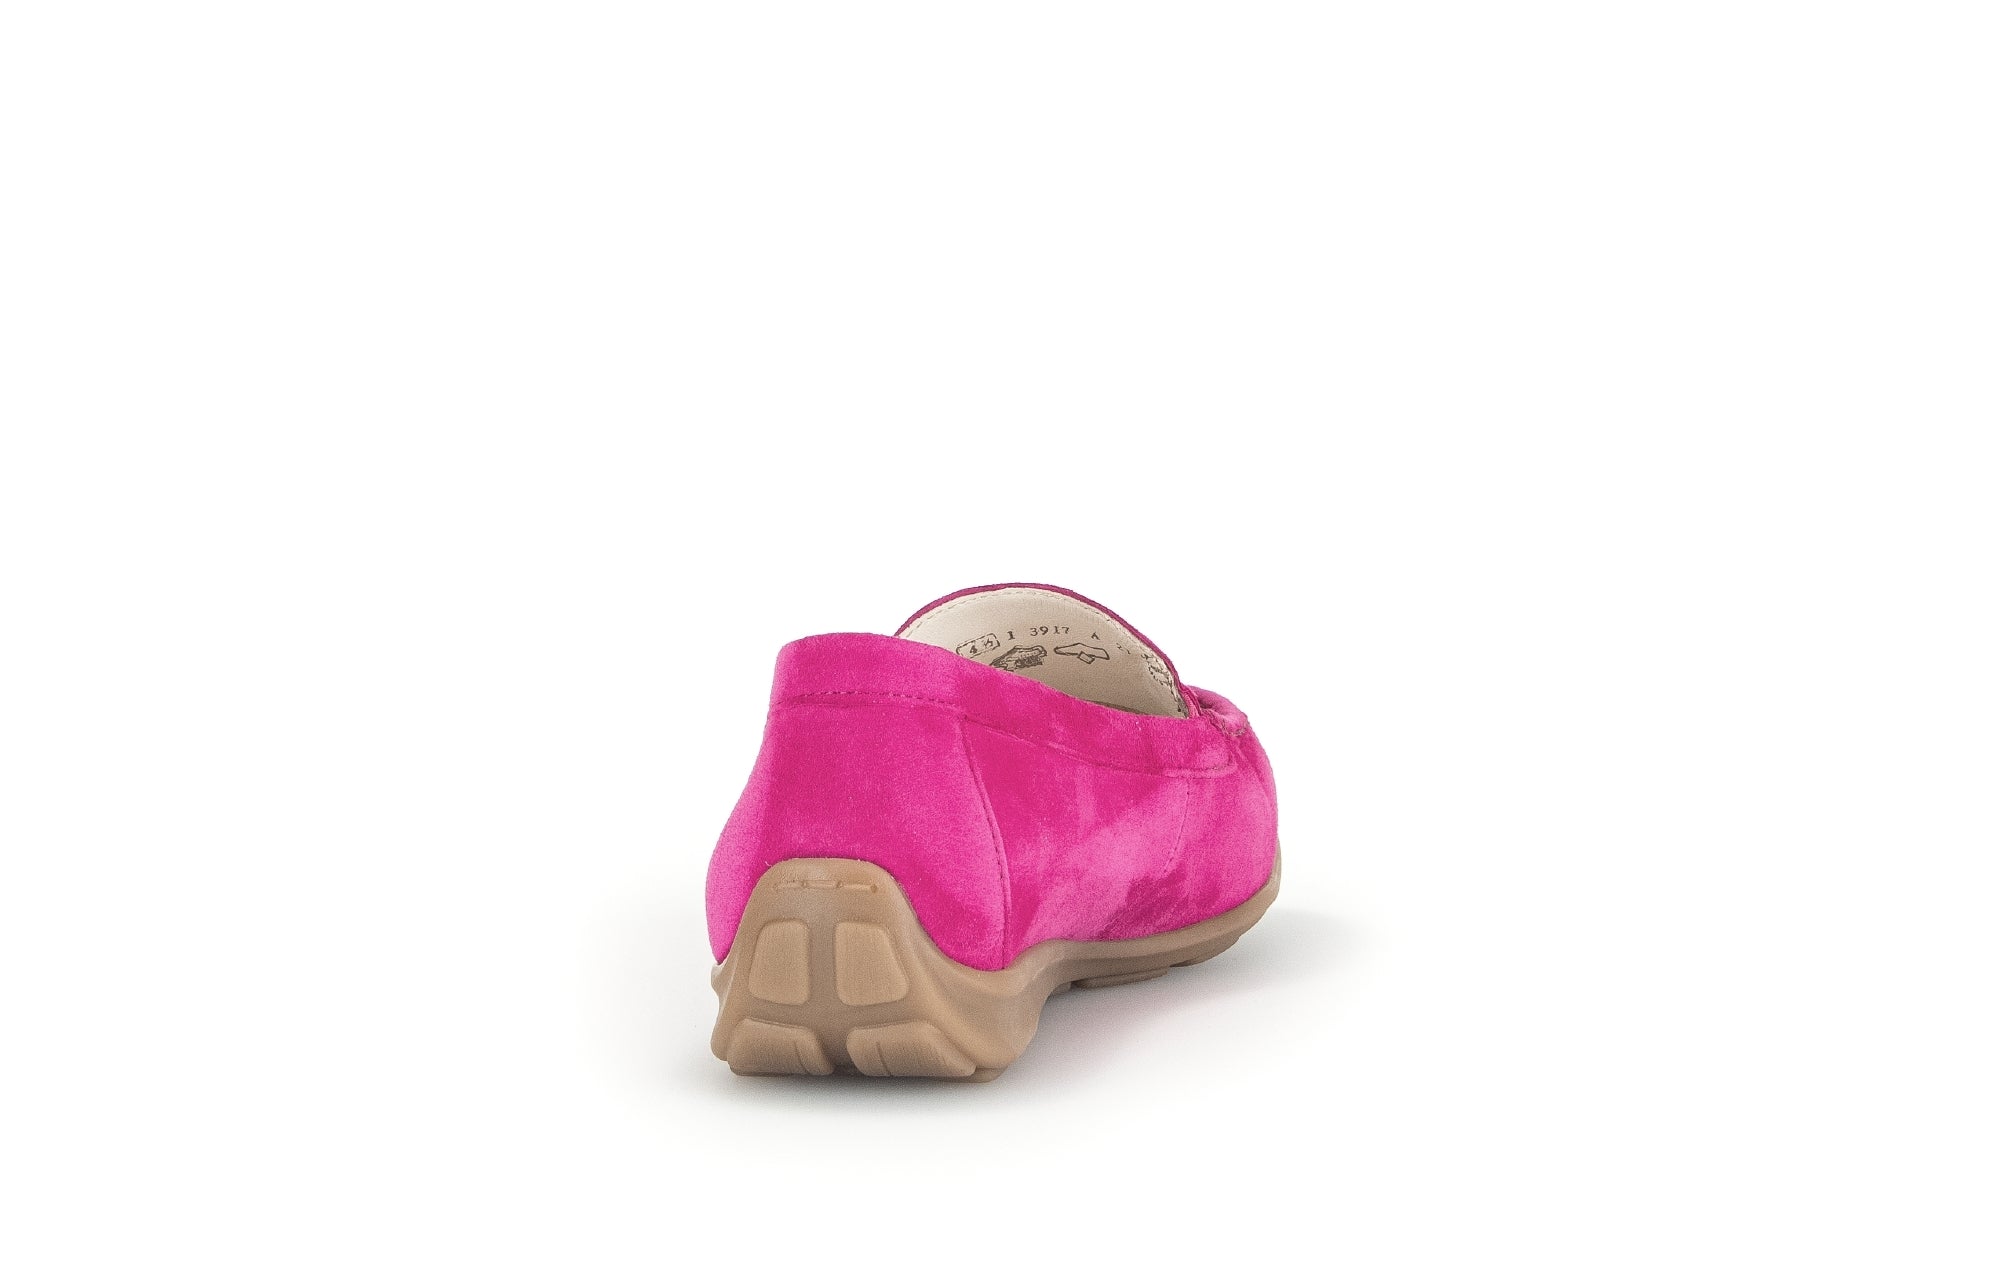 '42.440.21' women's loafer - pink - Chaplinshoes'42.440.21' women's loafer - pinkGabor